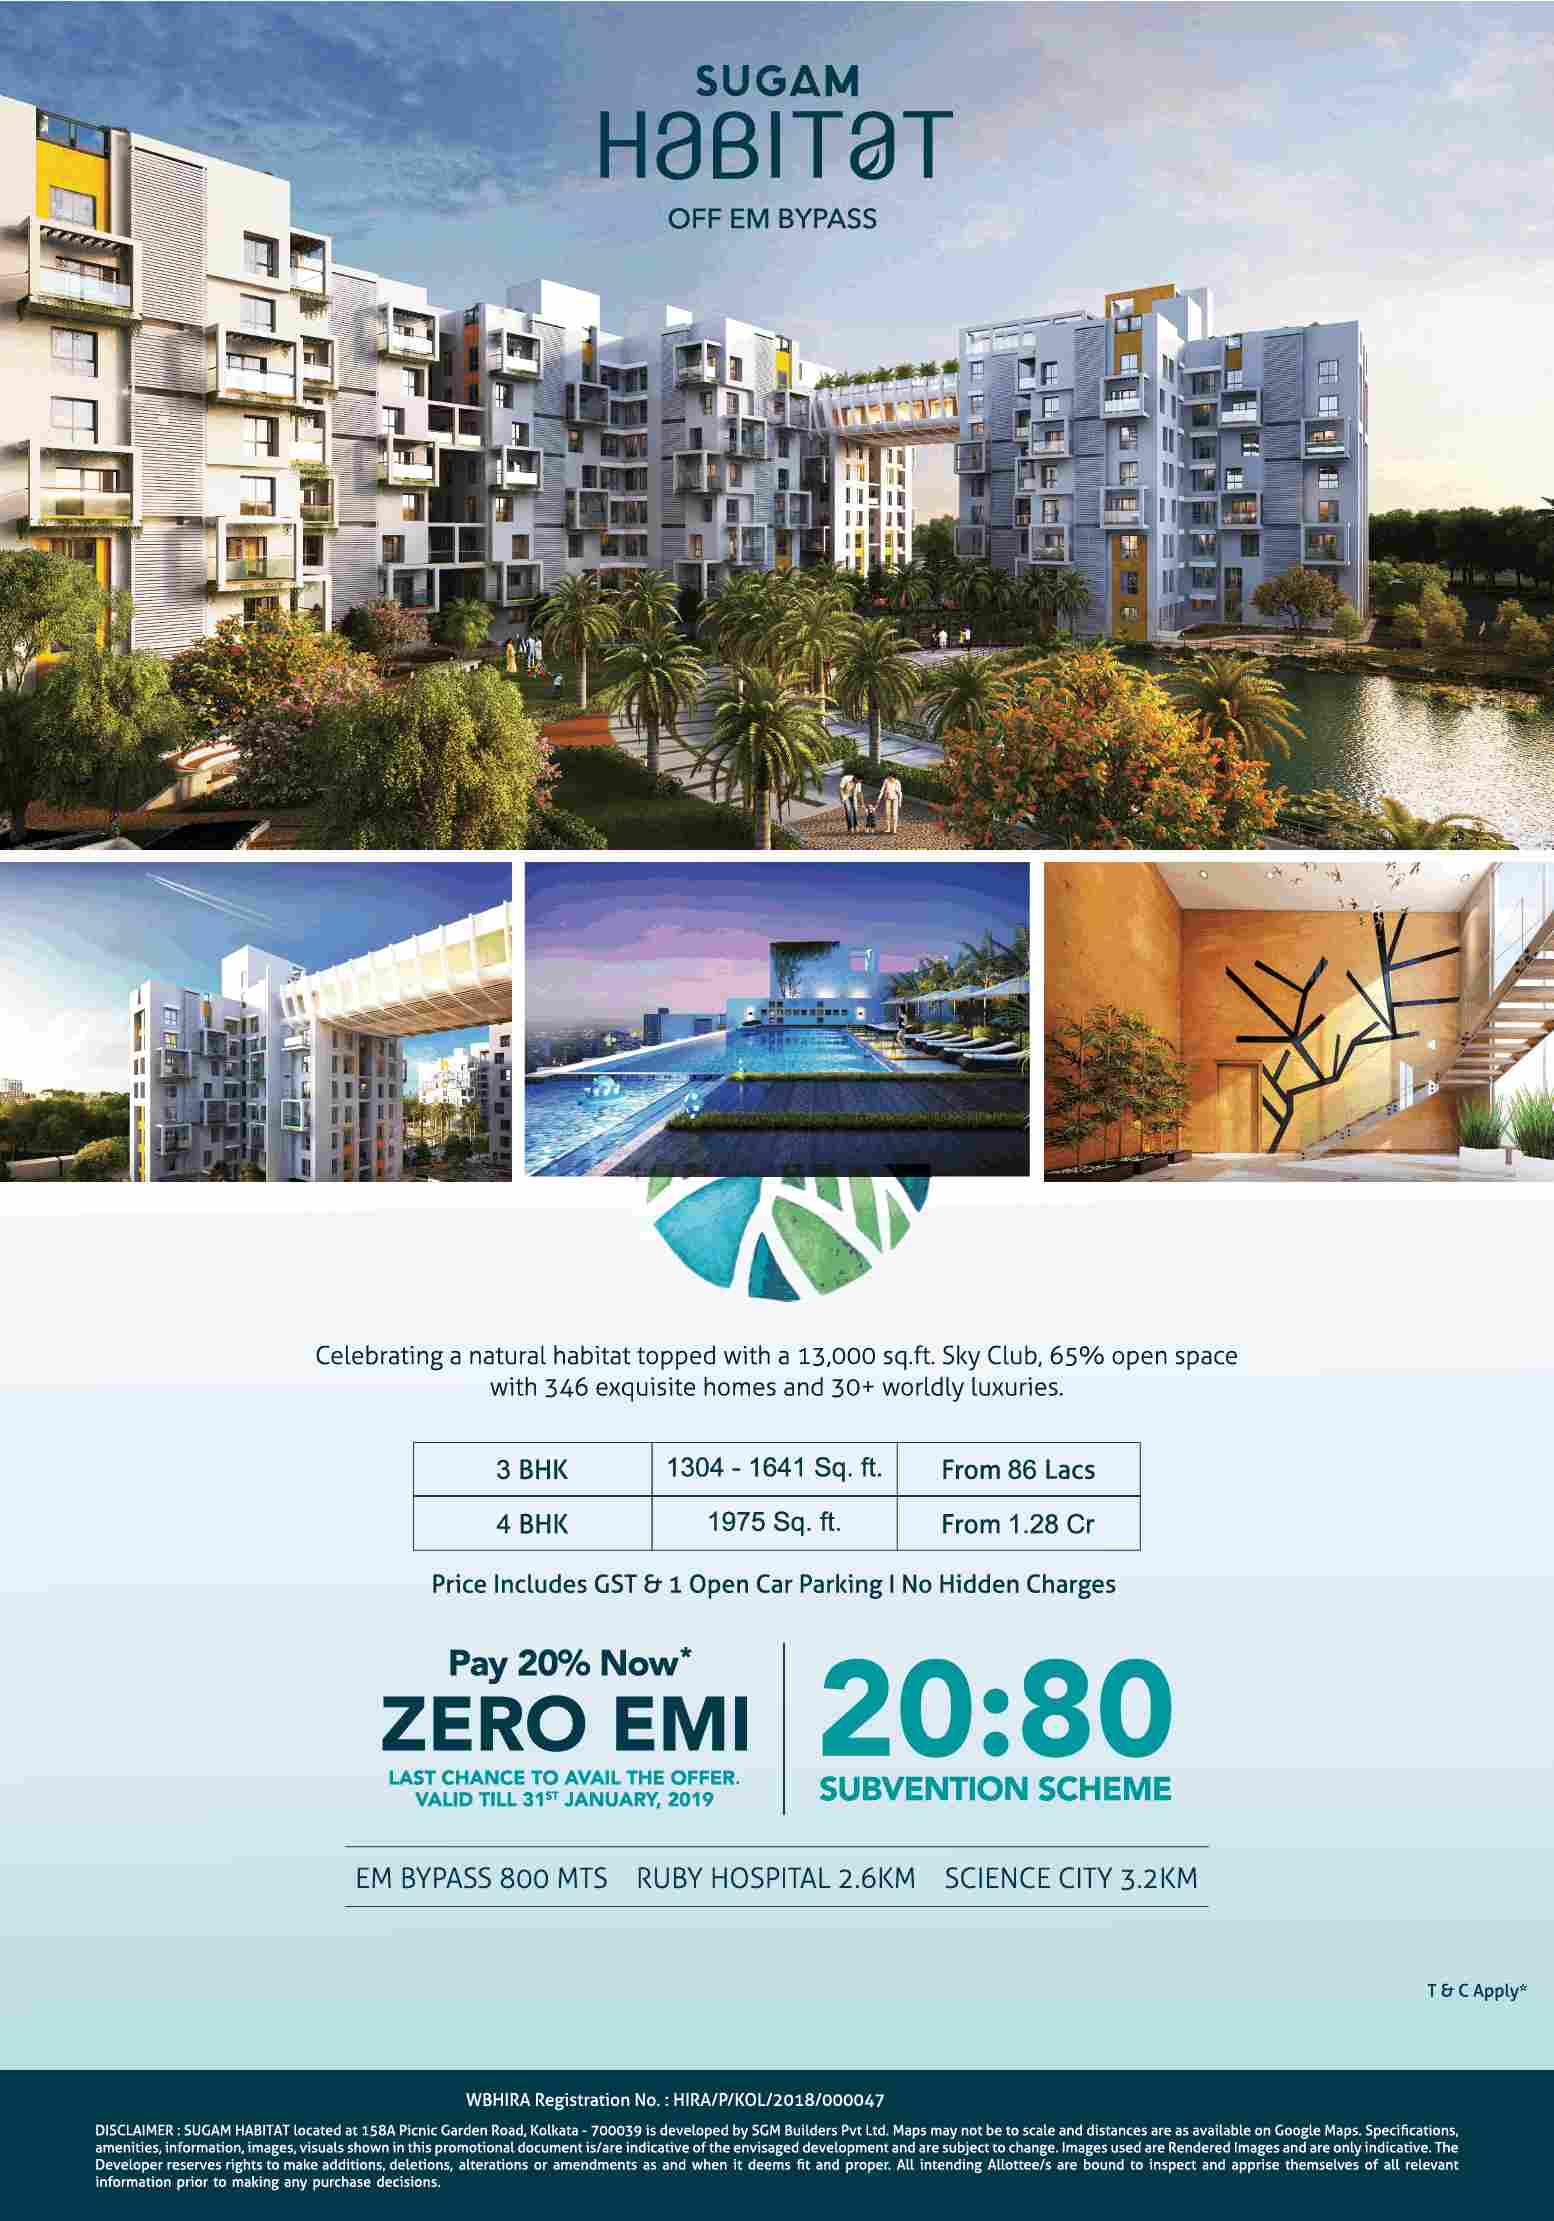 Pay 20% now and zero EMI at Sugam Habitat in Kolkata Update